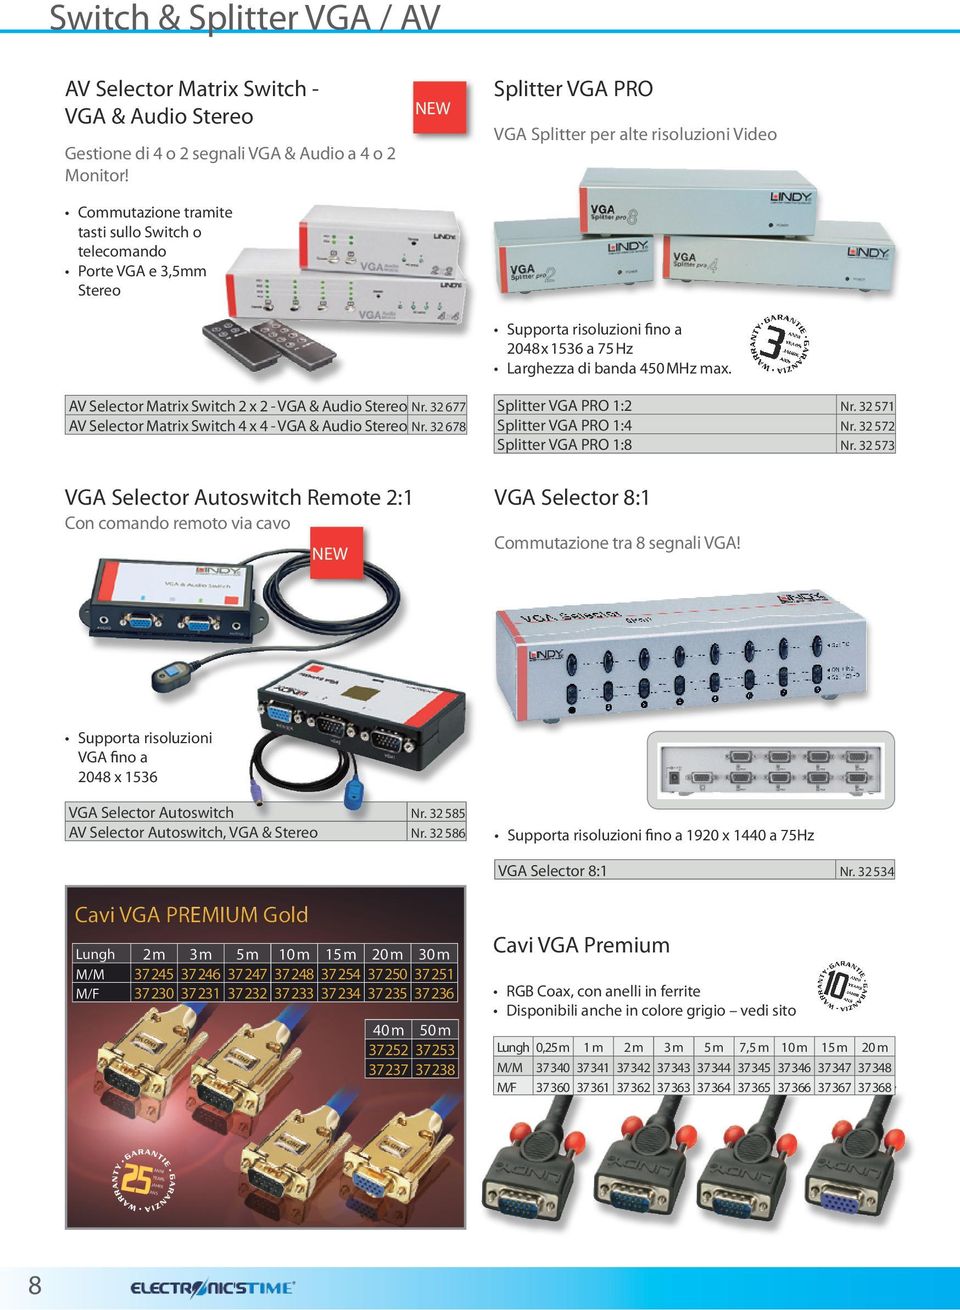 450MHz max. AV Selector Matrix Switch 2 x 2 - VGA & Audio Stereo Nr. 32677 AV Selector Matrix Switch 4 x 4 - VGA & Audio Stereo Nr. 32678 Splitter VGA PRO 1:2 Nr. 32571 Splitter VGA PRO 1:4 Nr.